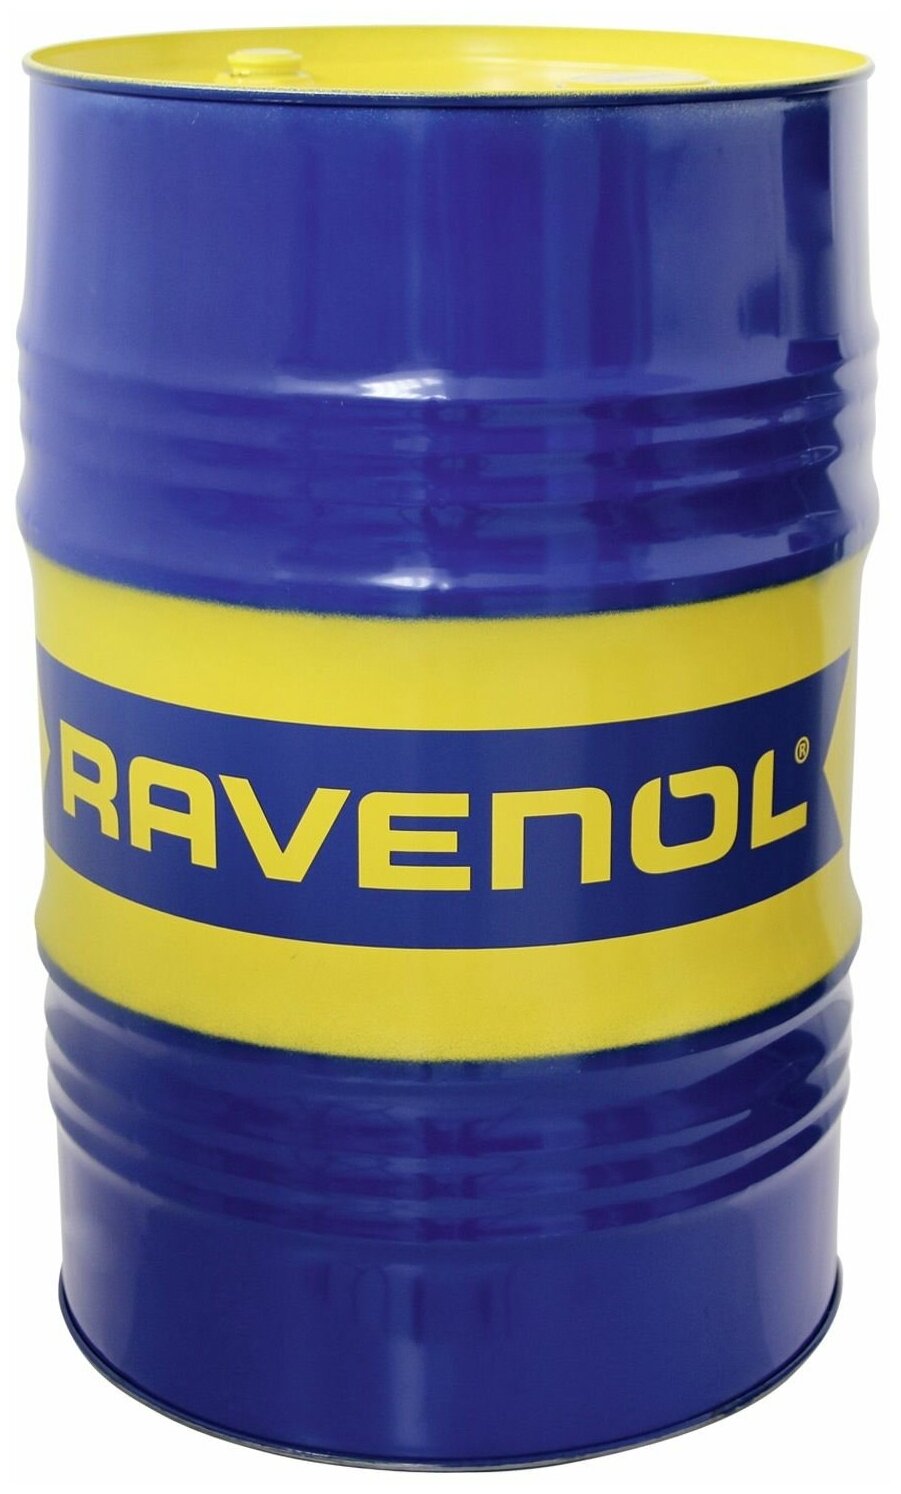  Ravenol 75/90 TGO   60  RAVENOL 1222105-060 |   1 